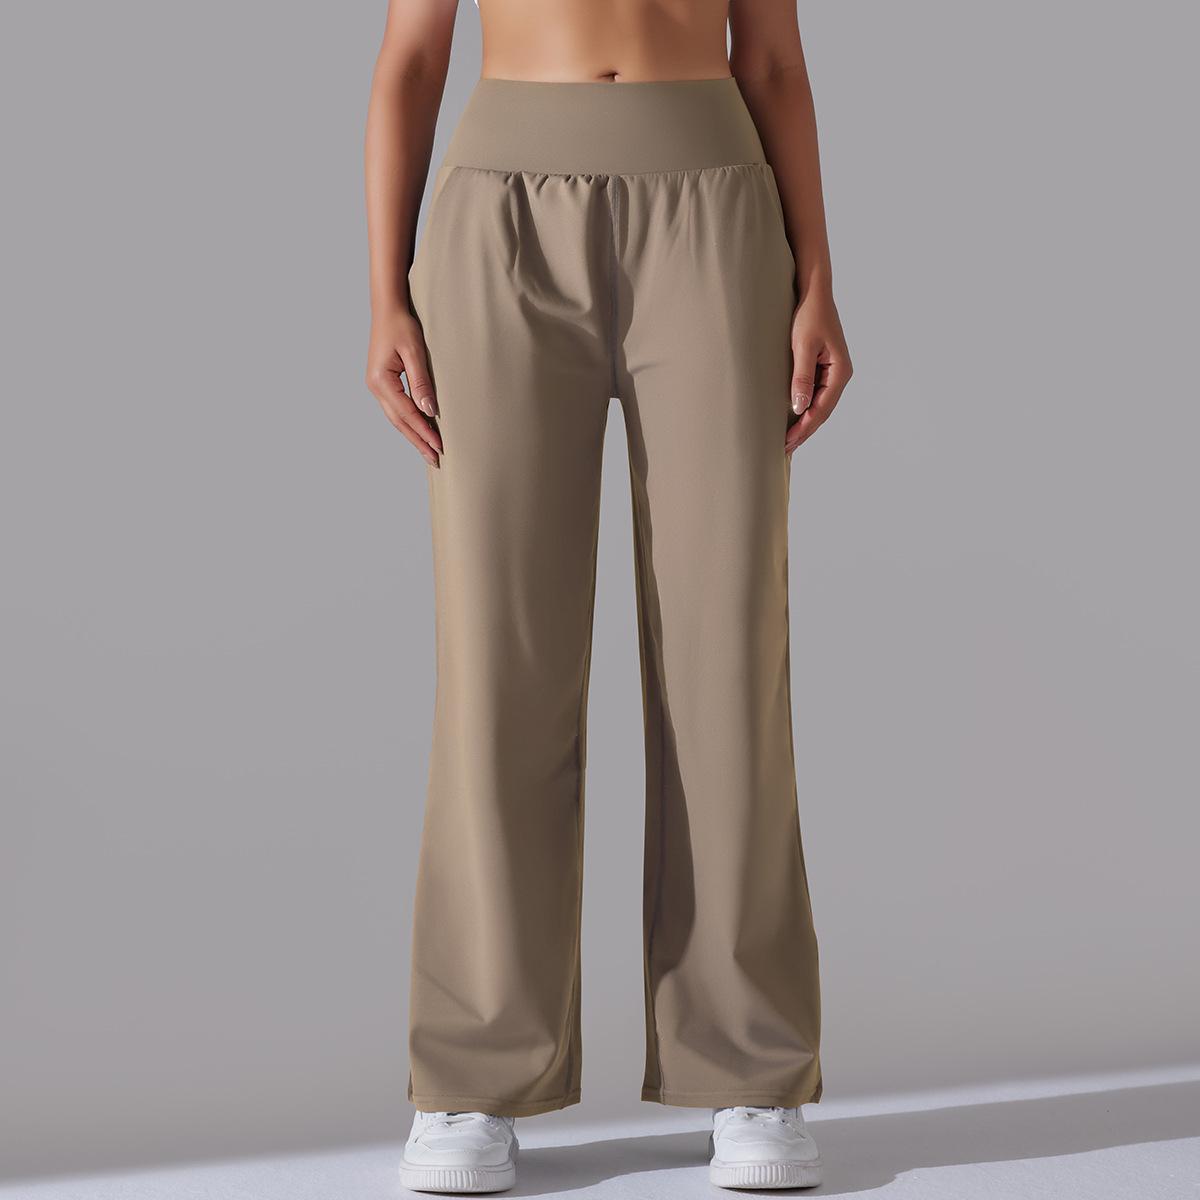 BamBam Women Sports Casual Loose Yoga Pants Pocket High Waist Wide Leg Pants - BamBam